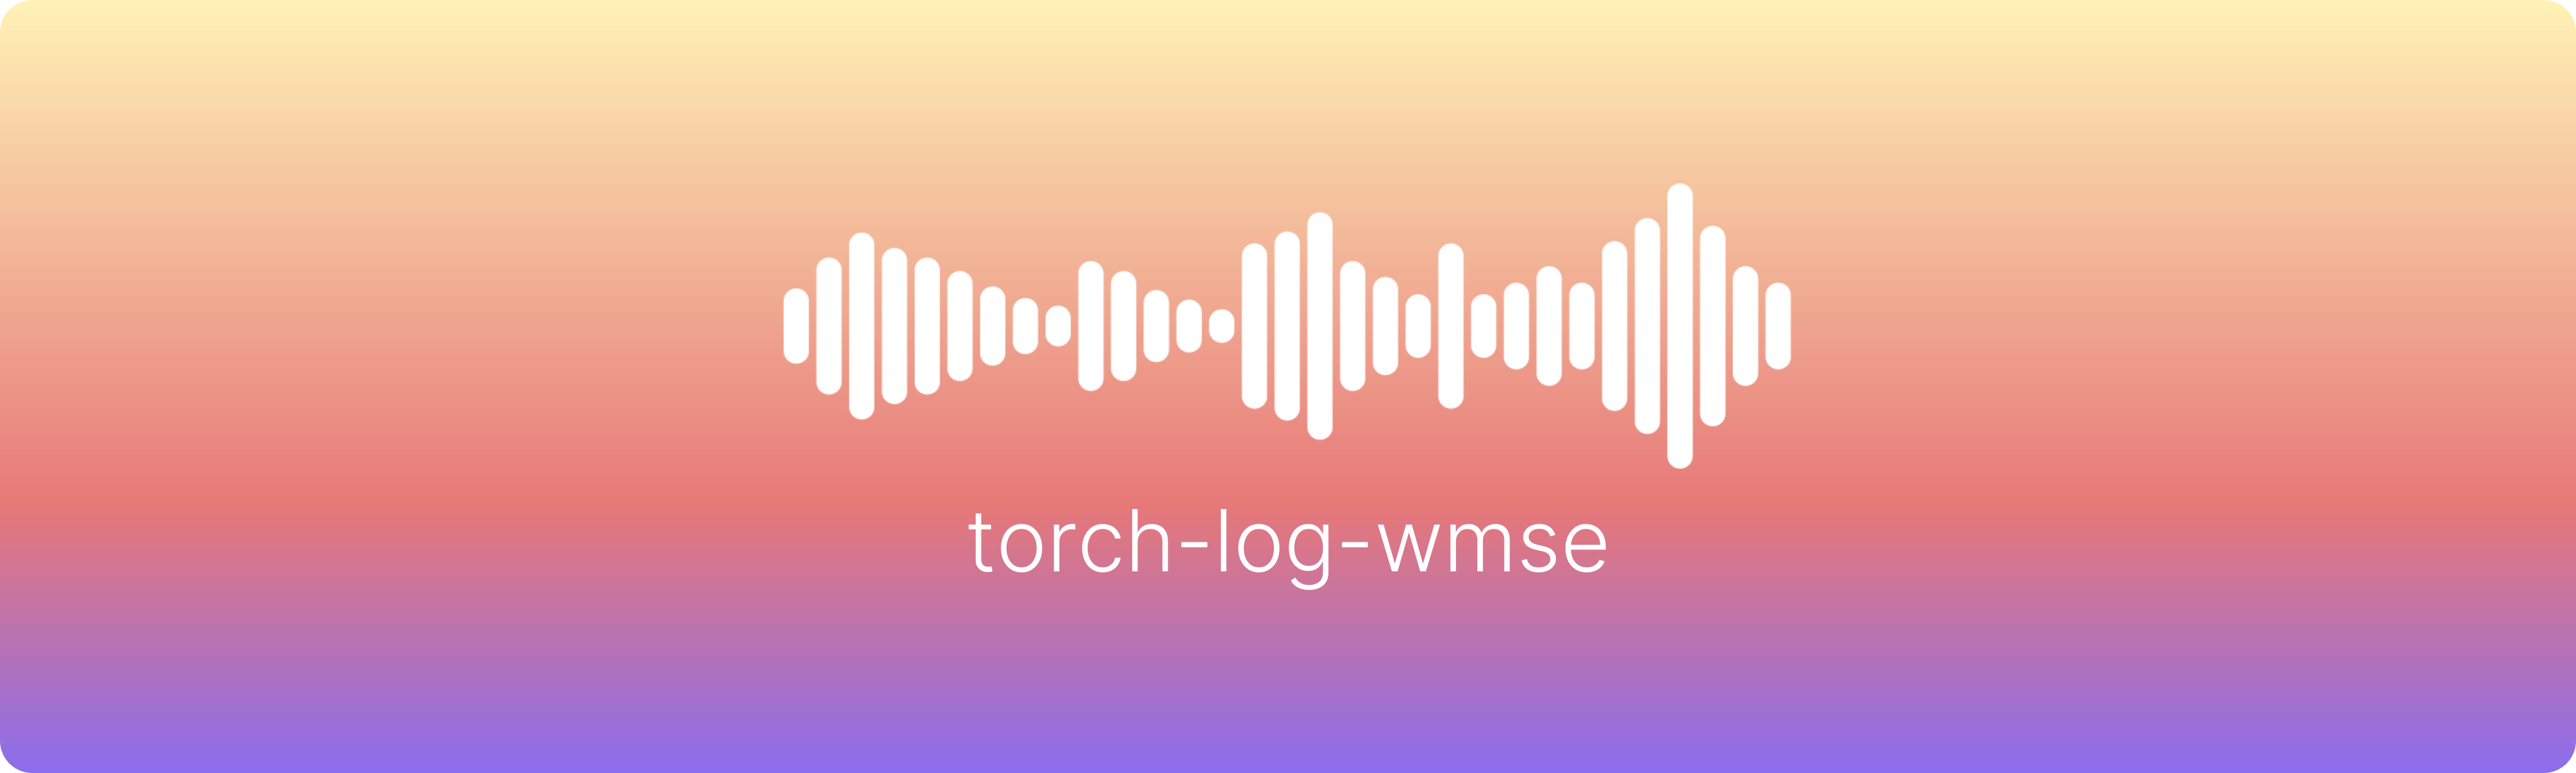 torch-log-wmse-logo